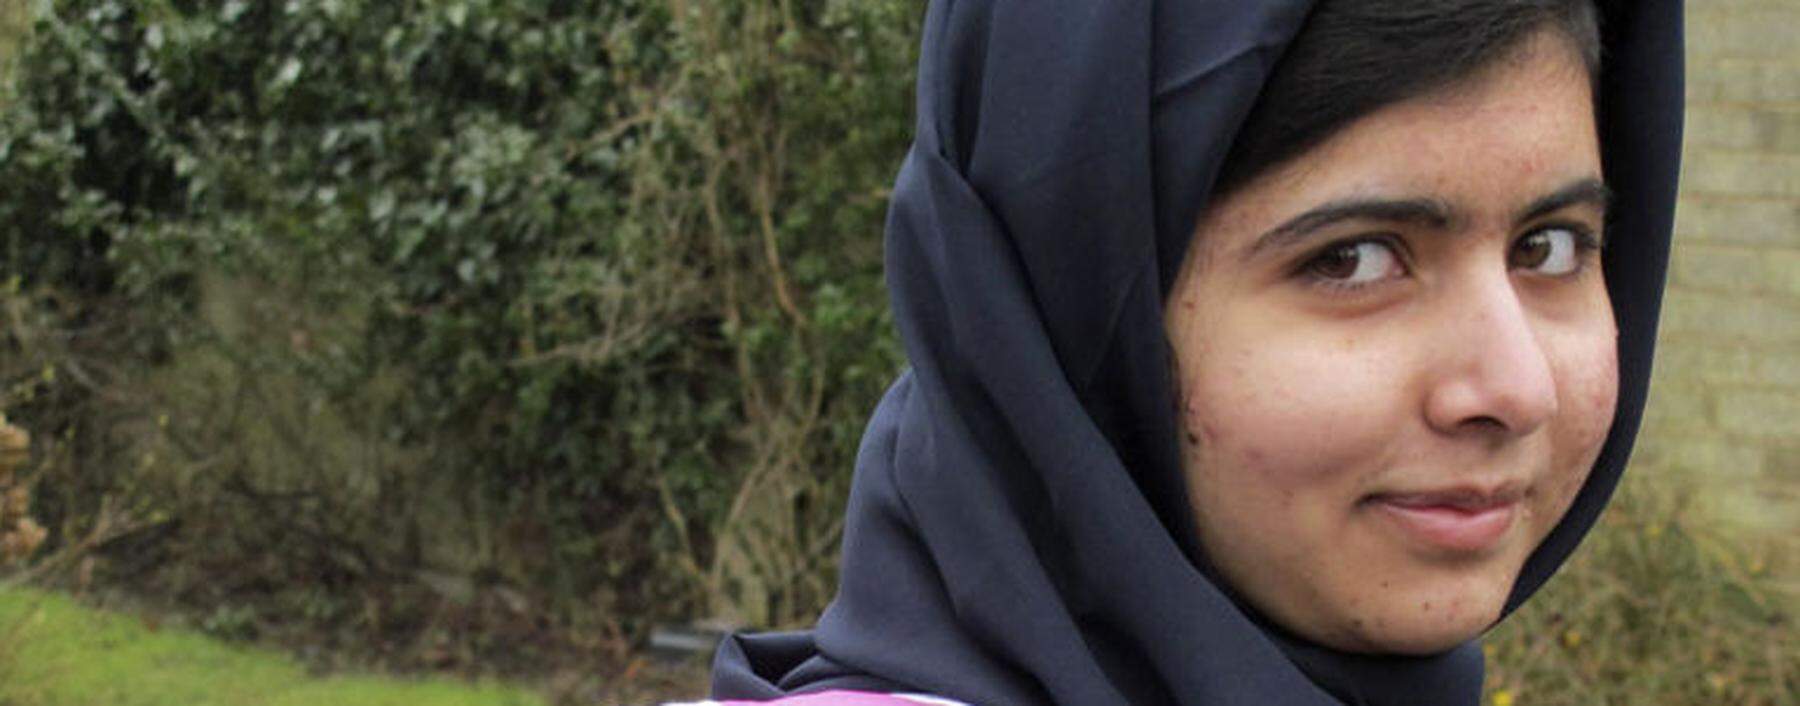 Malala Yousufzai smiles as she attends Edgbaston High School for girls in Edgbaston